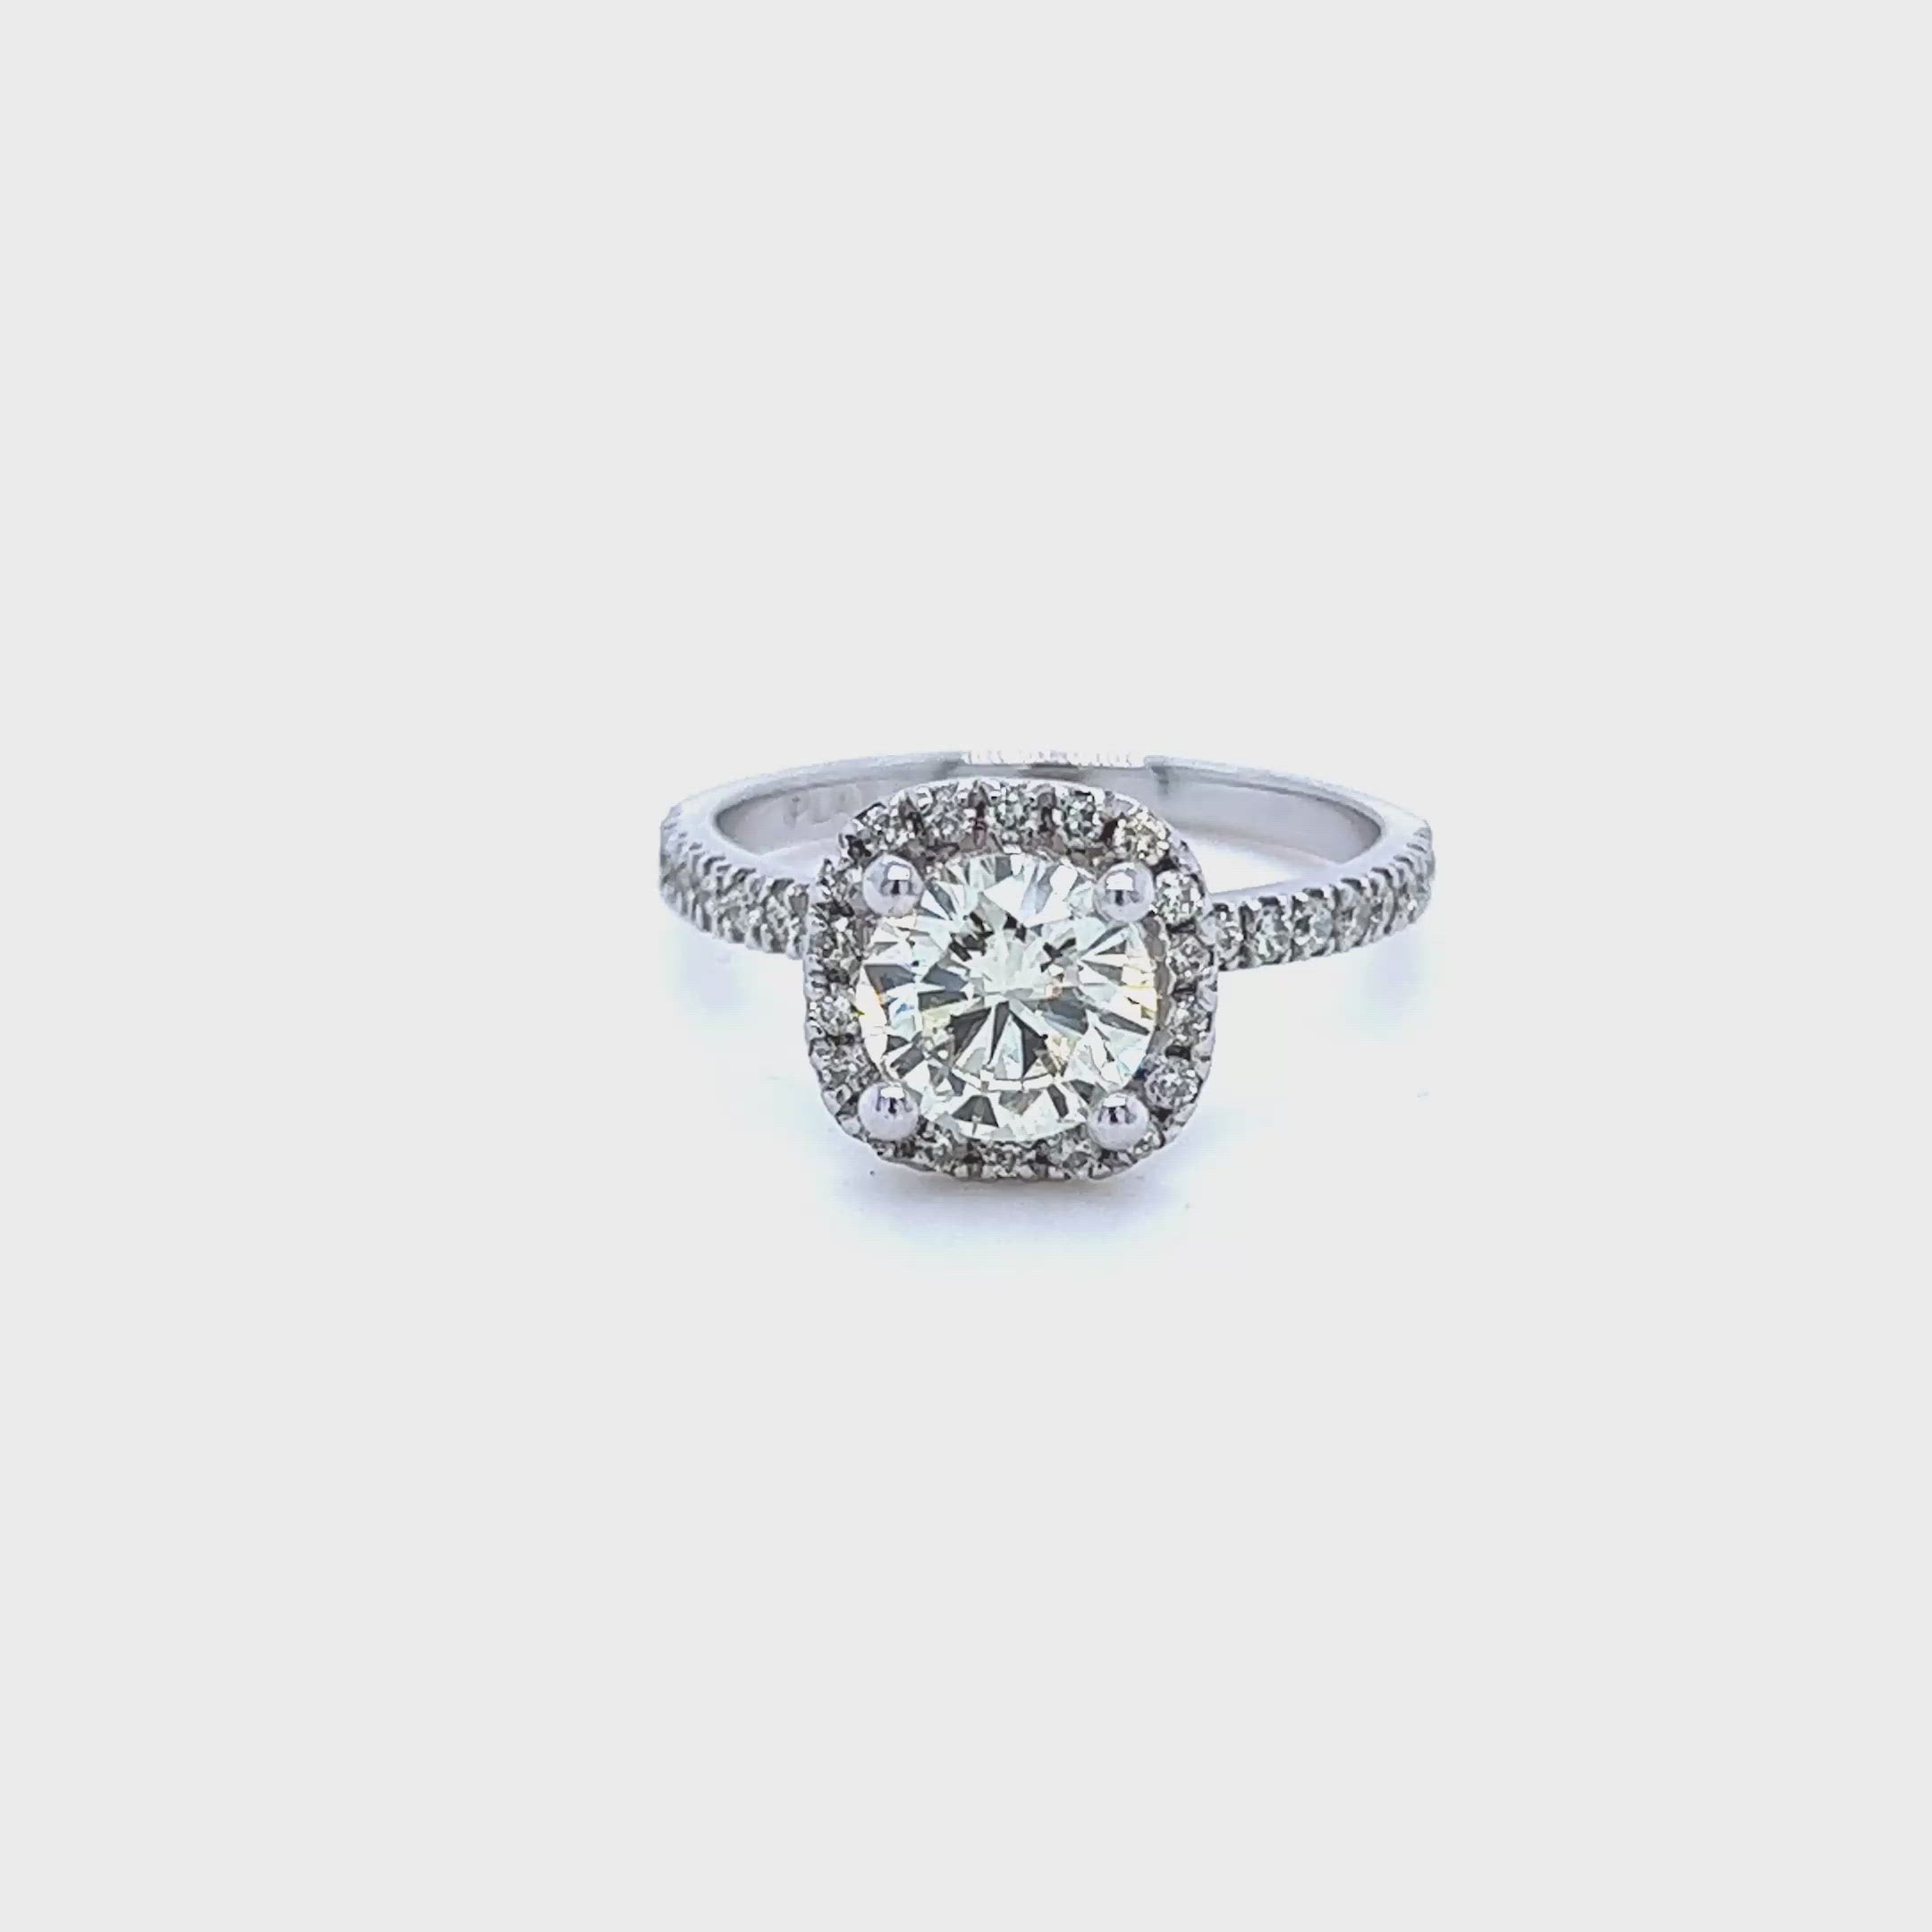 Distinctive 1.40 CT Round Cut Diamond Engagement Ring in 14 KT White Gold